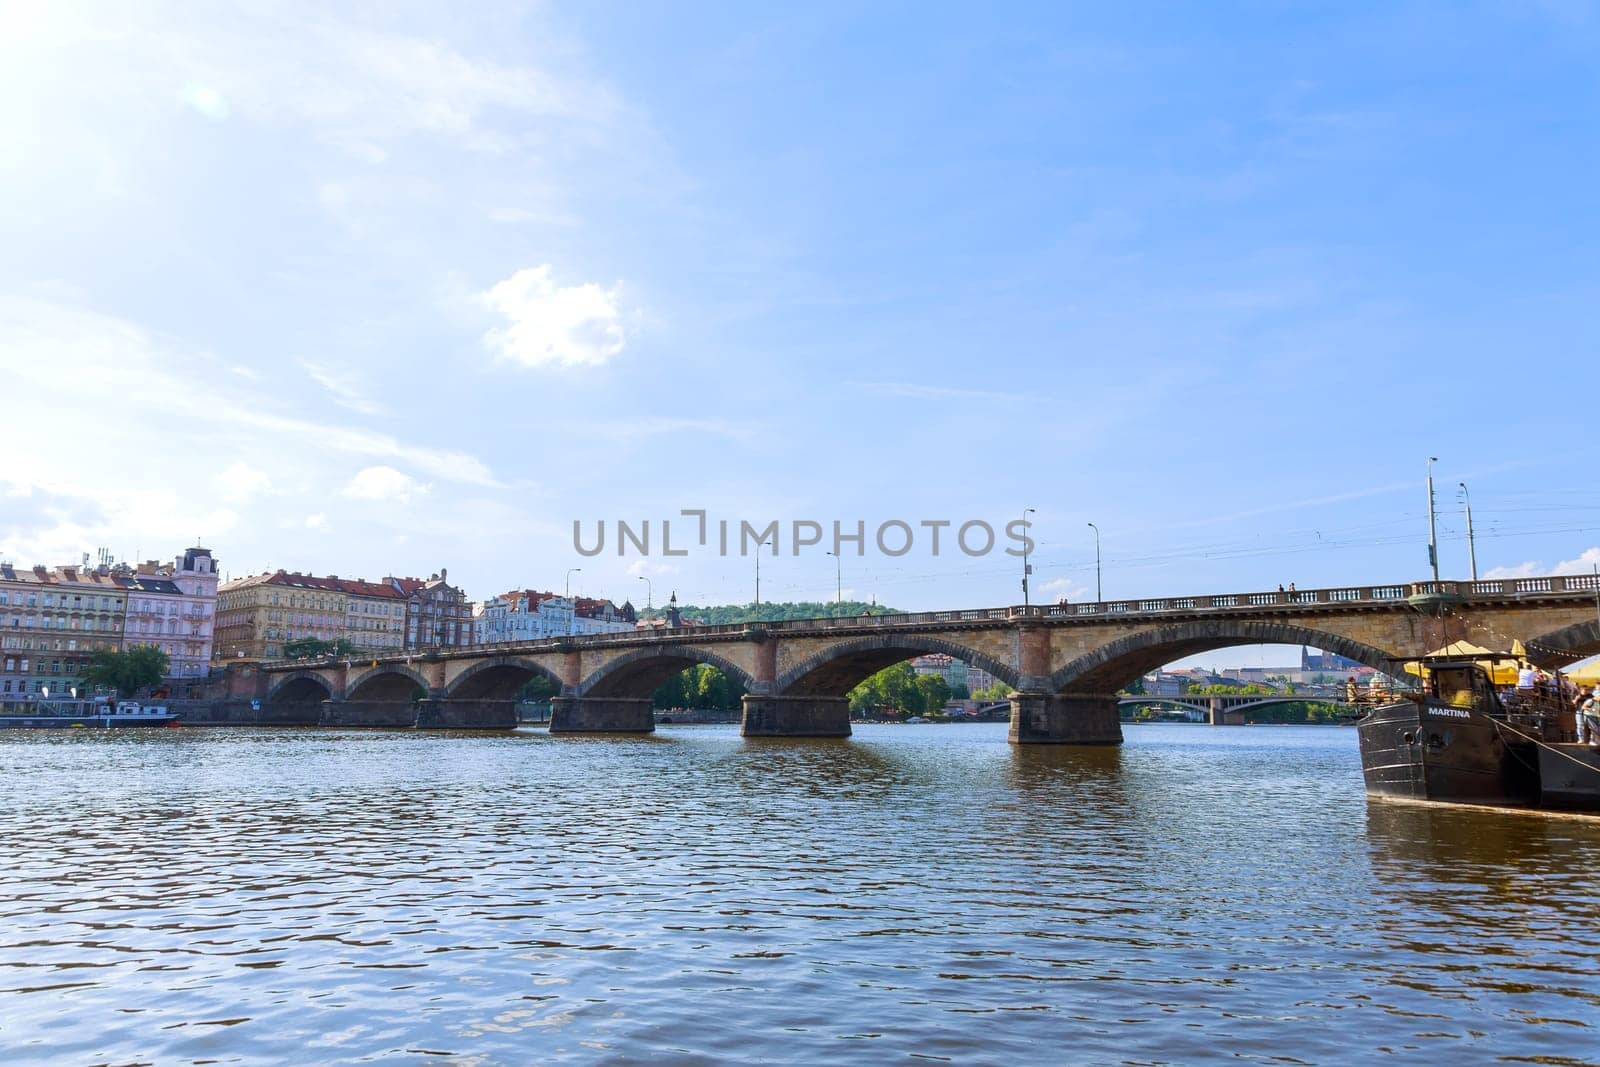 22 May 2022 Prague, Czech Republic. View of the transport bridge over the Vltava River in Prague, Czech Republic.